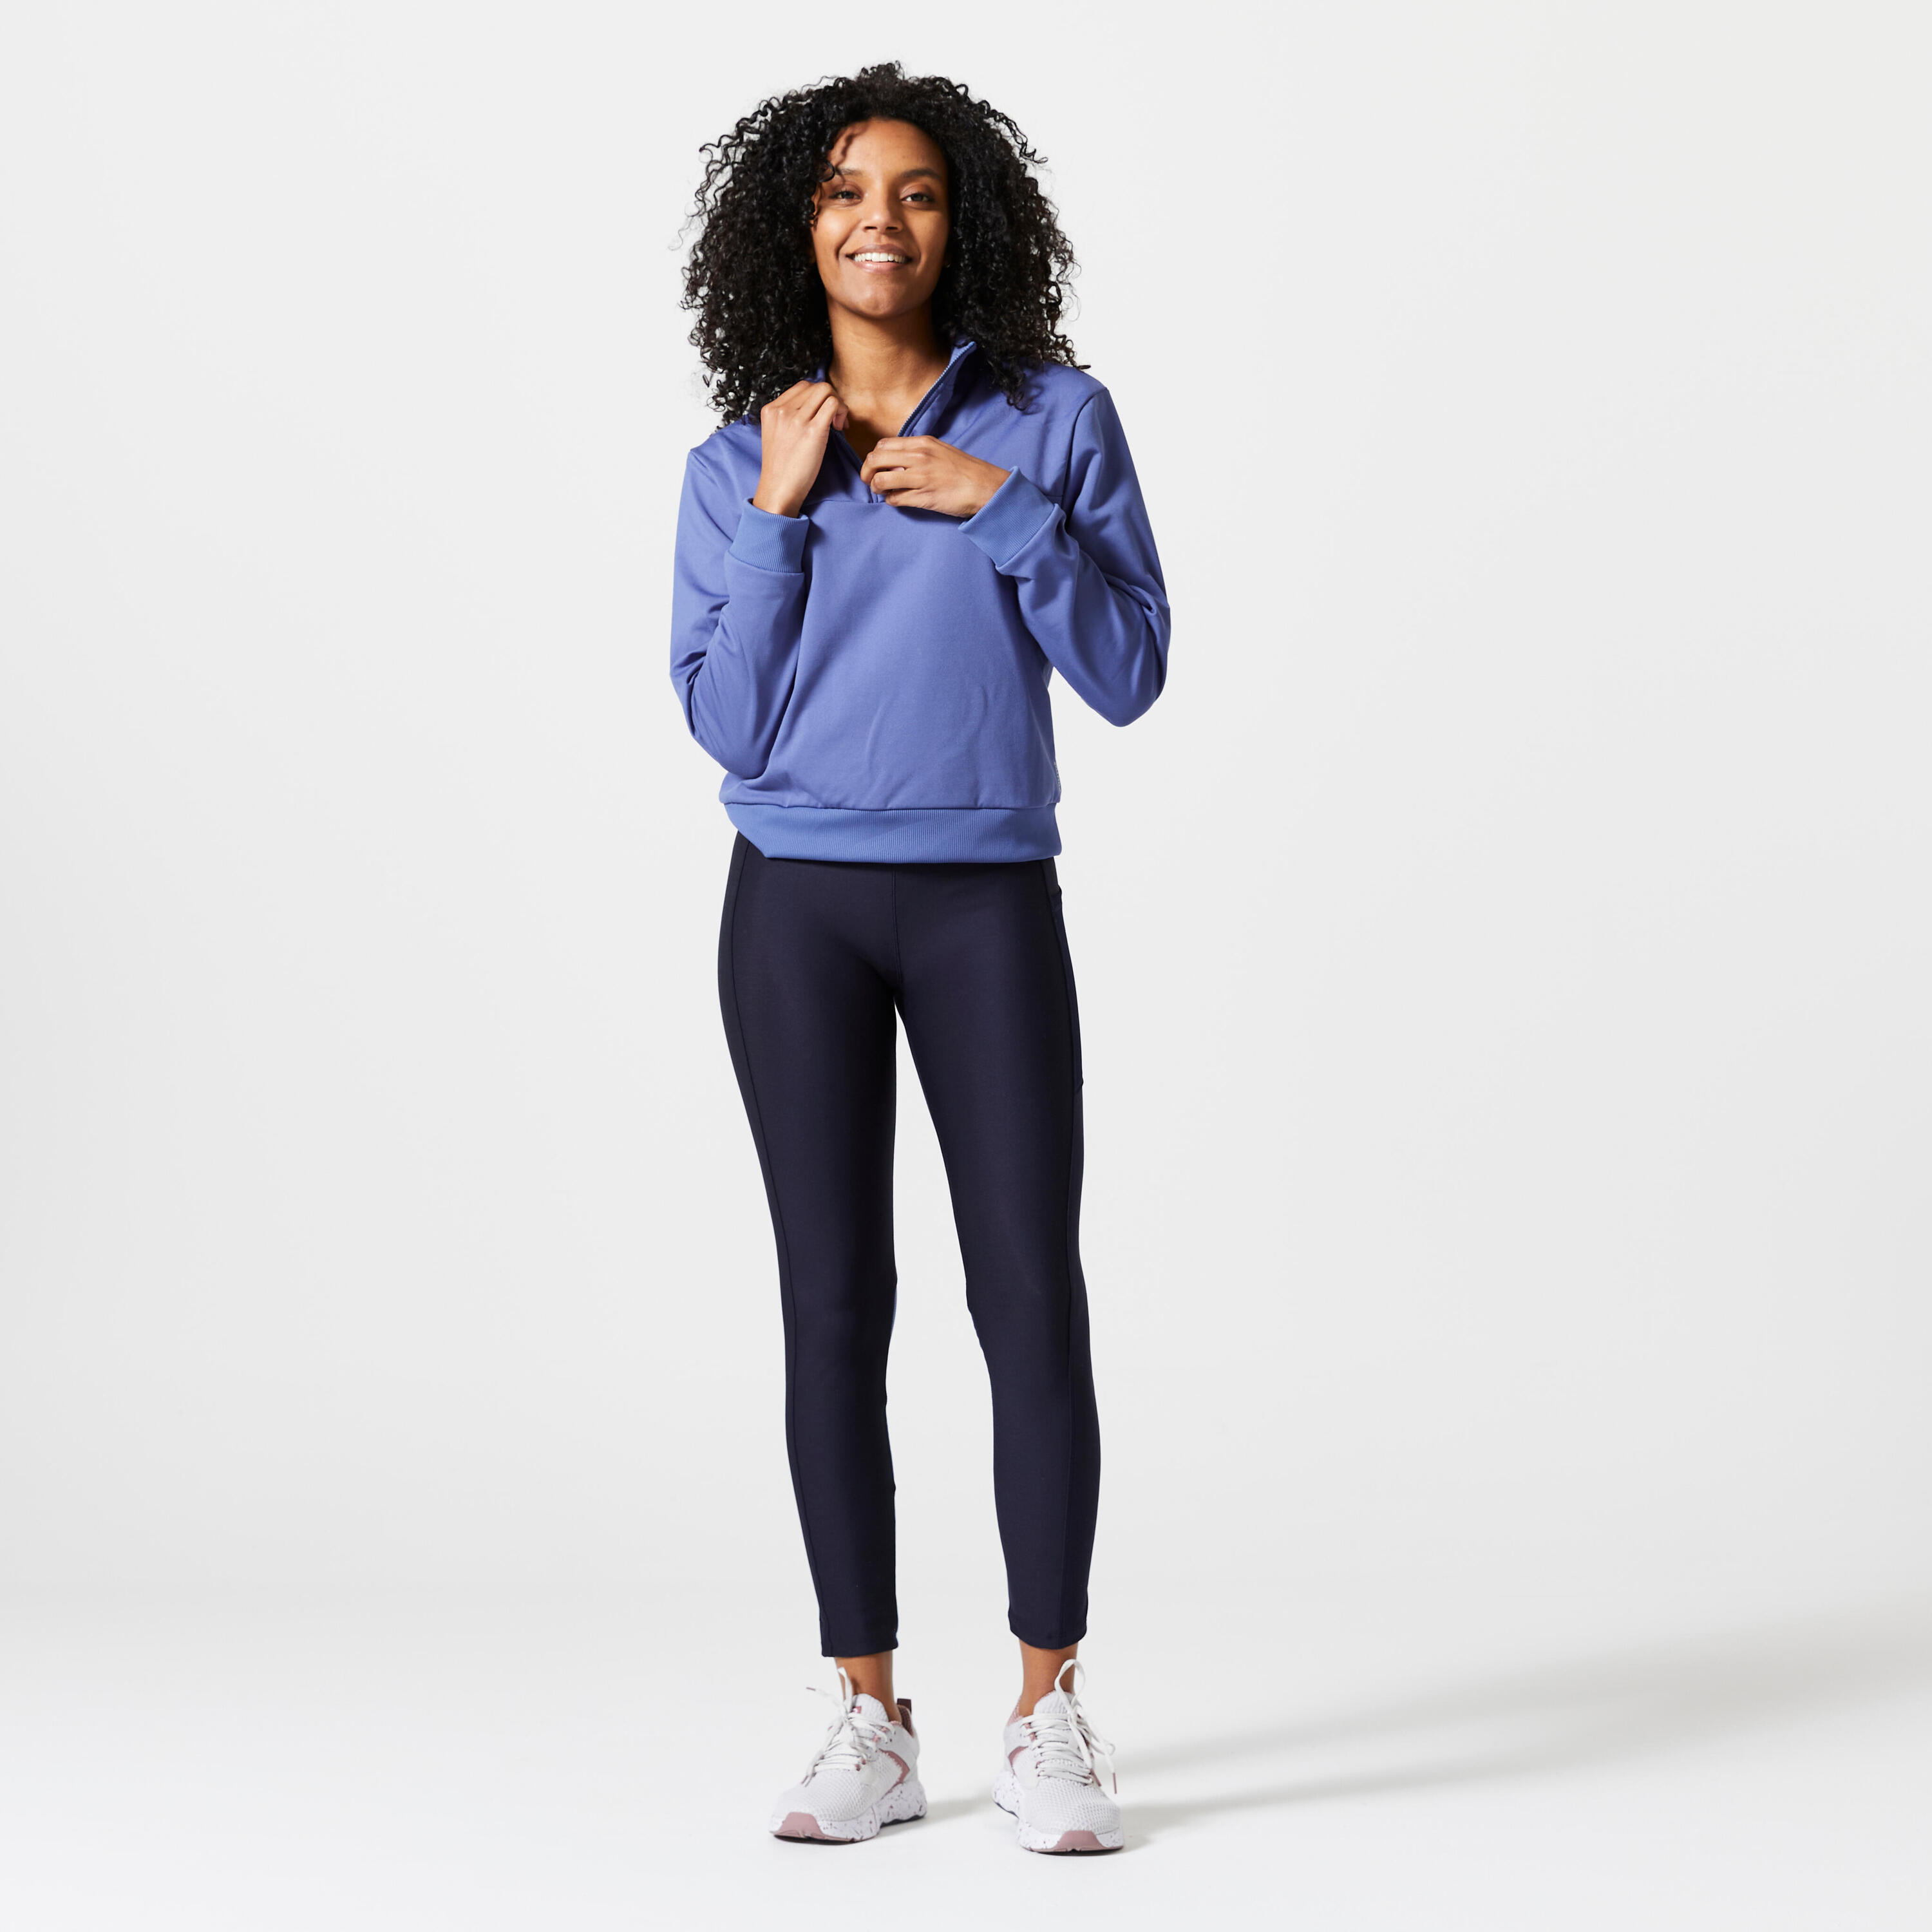 Women's Cardio Fitness Long-Sleeved Cropped Sweatshirt - Storm Blue 2/5